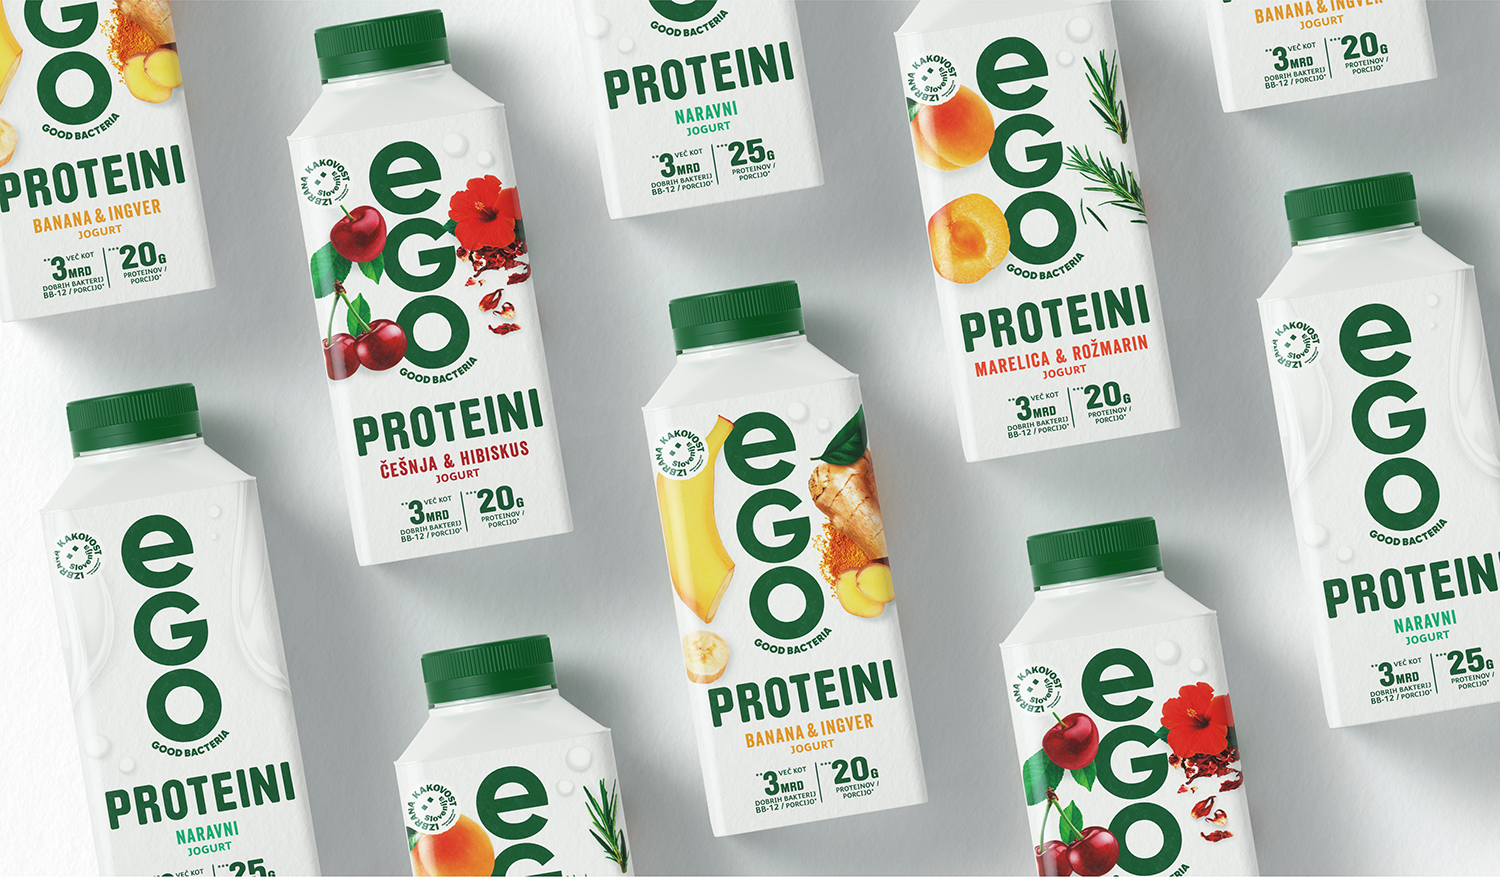 Ego Yoghurt Branding and Packaging Design